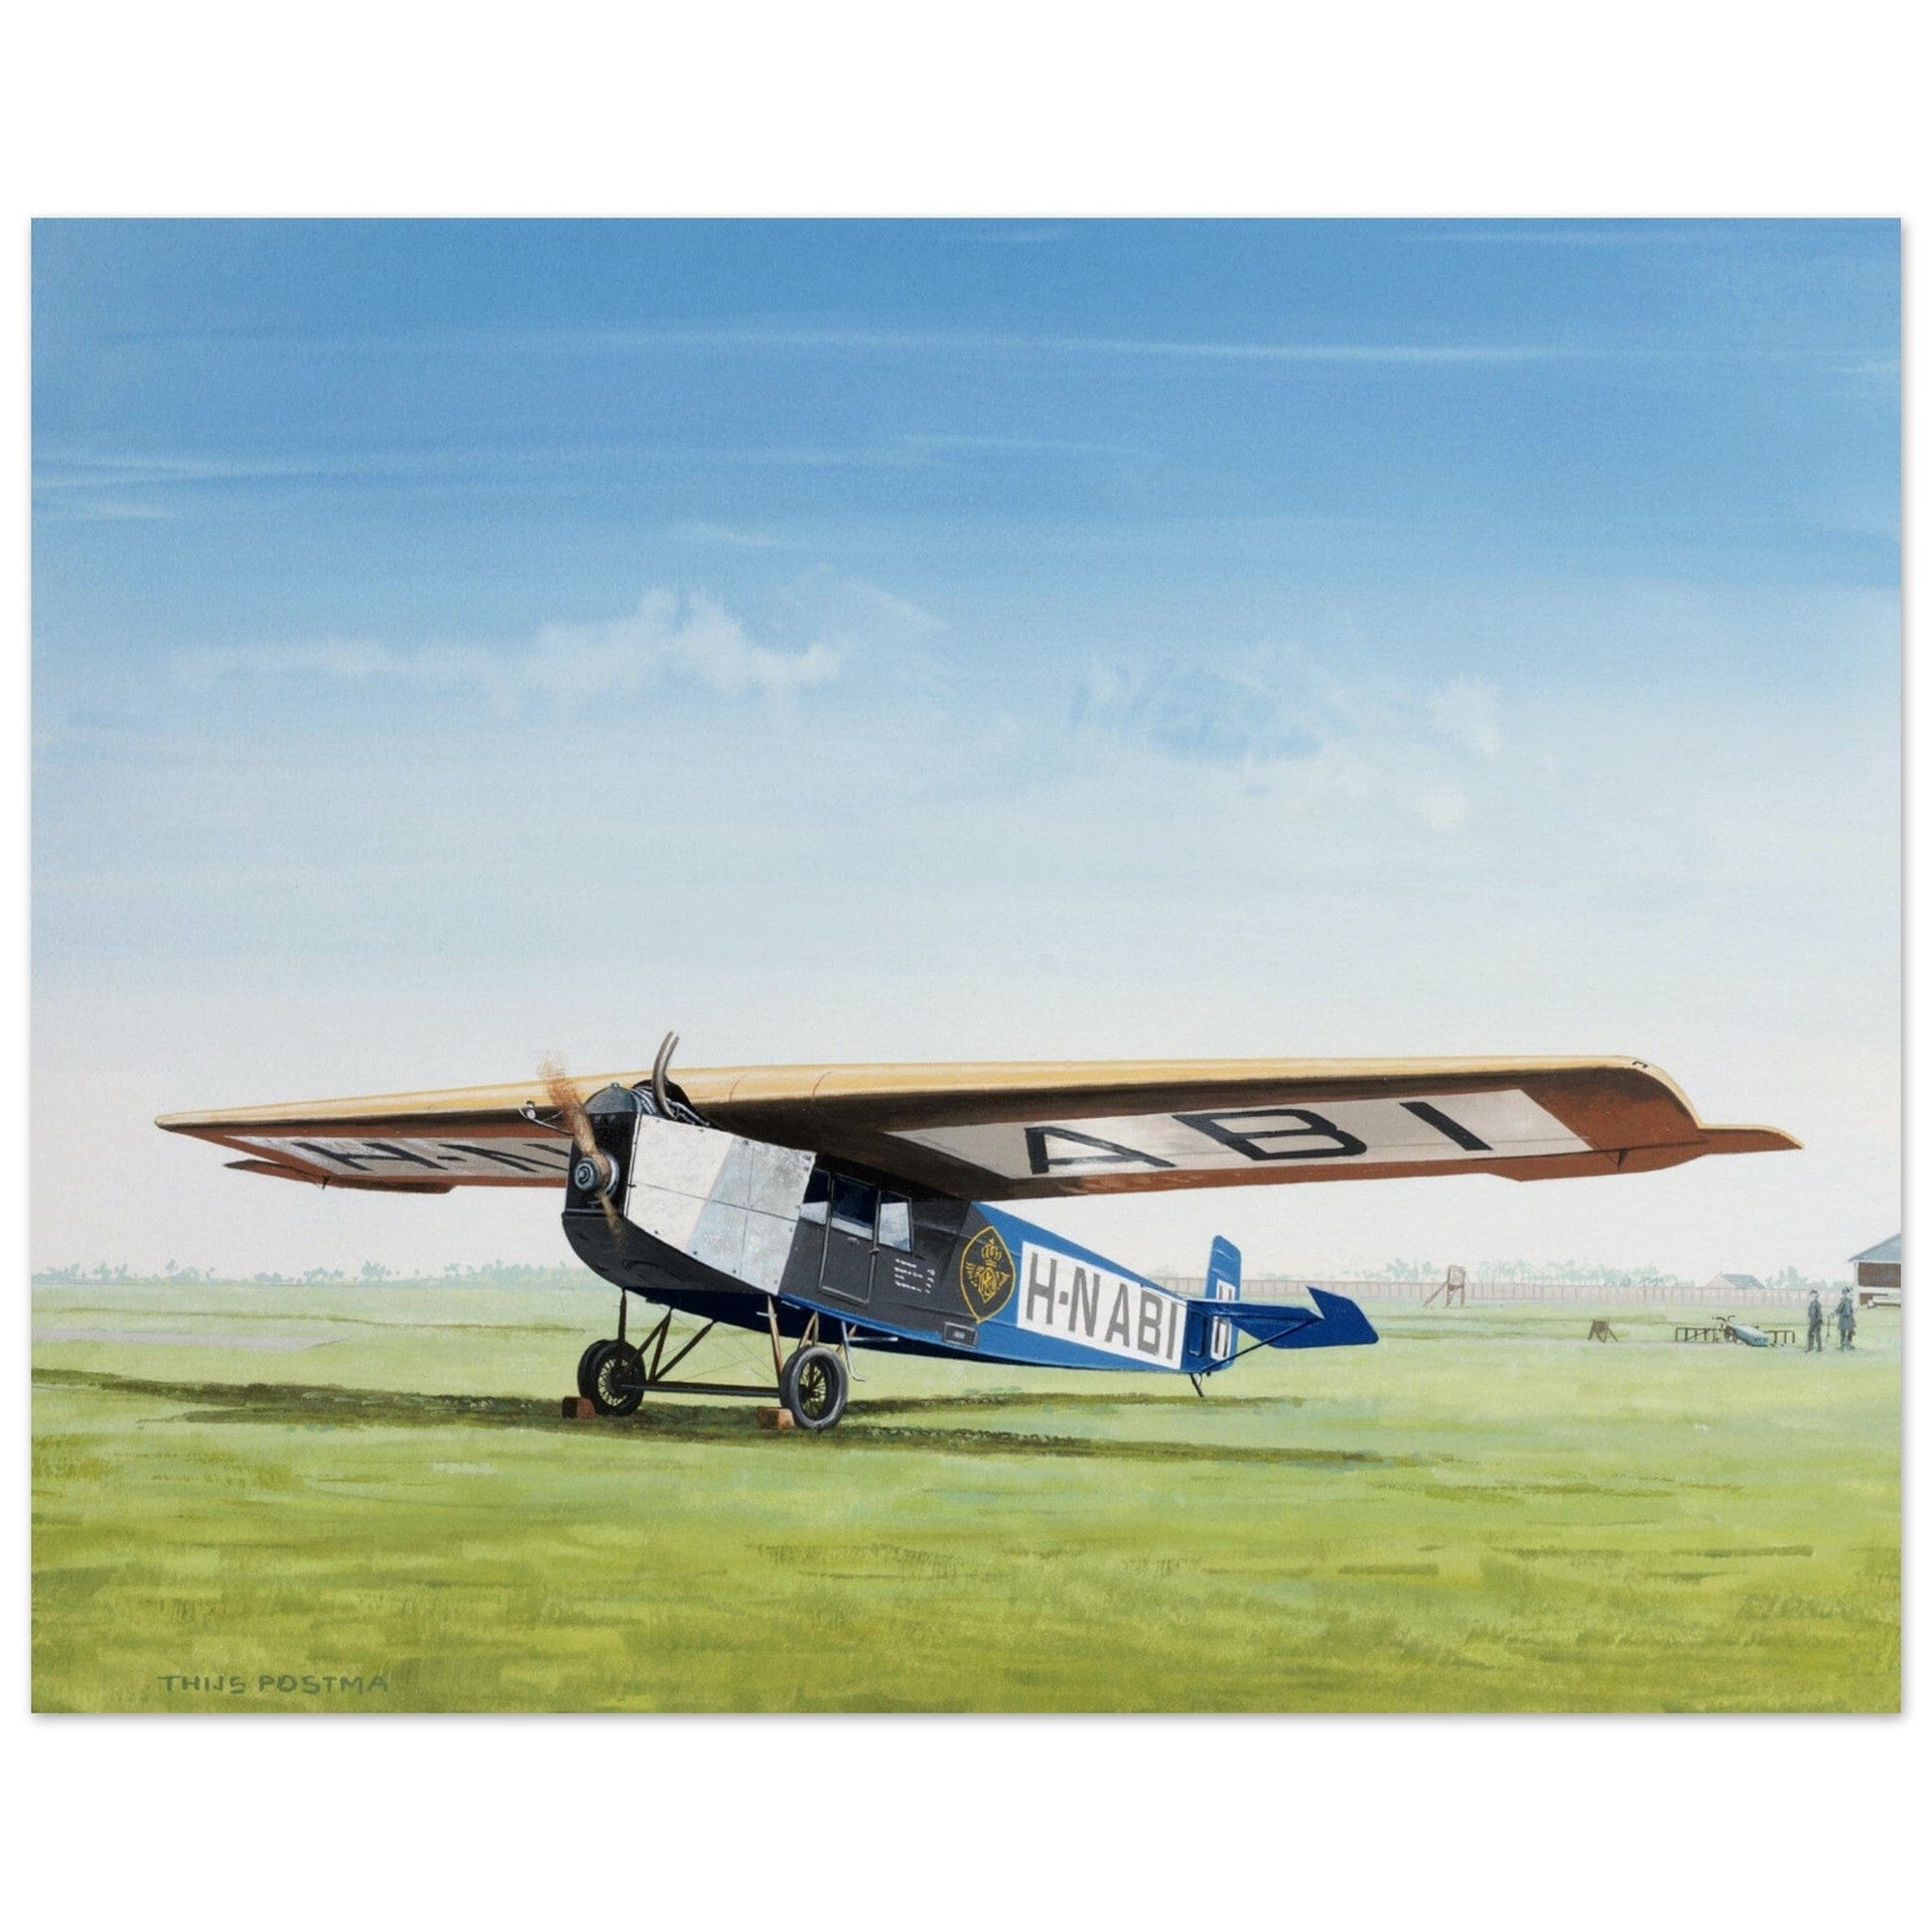 Thijs Postma - Poster - Fokker F.III H-NABI KLM Poster Only TP Aviation Art 40x50 cm / 16x20″ 